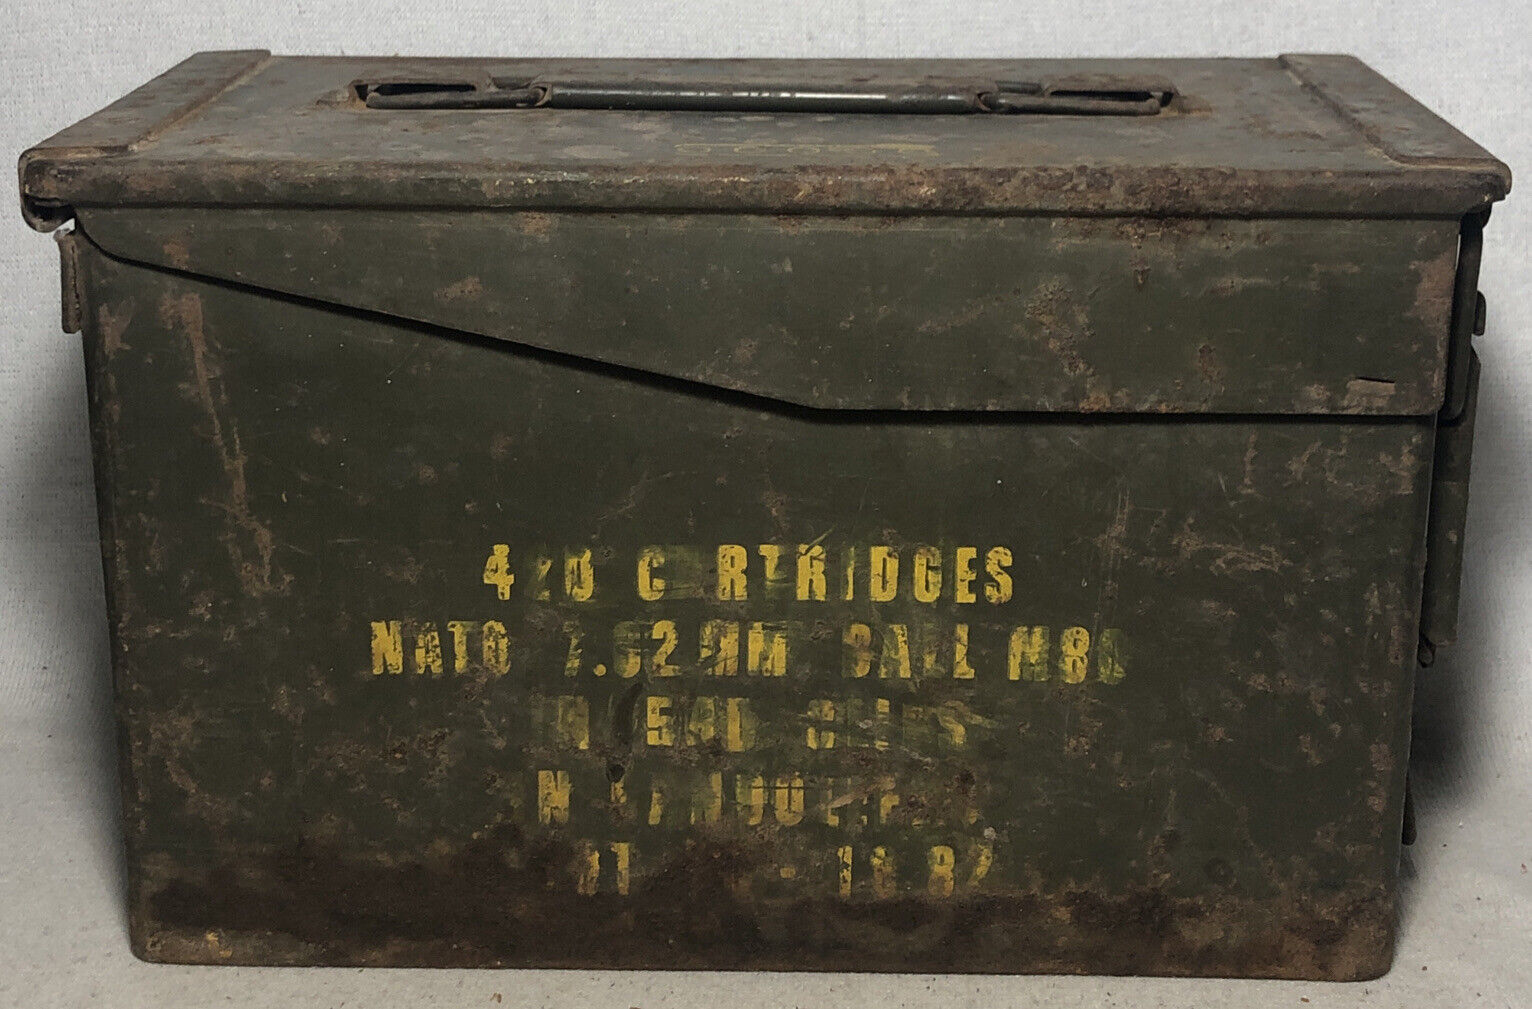 Vintage Ammo Box 420 Cartridges Nato 7.62 mm Ball M80